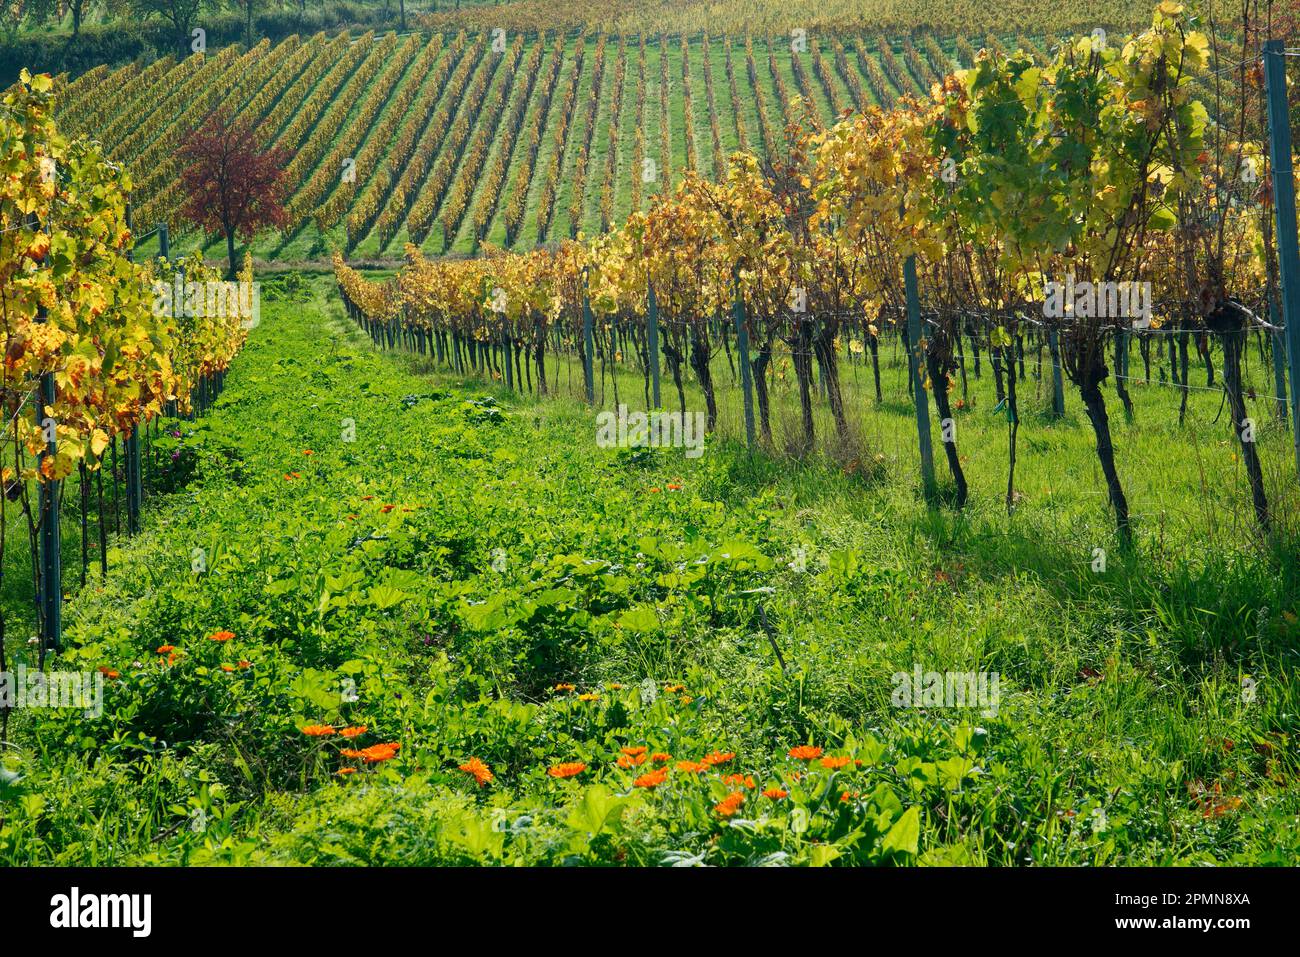 Vineyard, Maikammer, Southern Wine Route, Rhineland-Palatinate, Germany Stock Photo